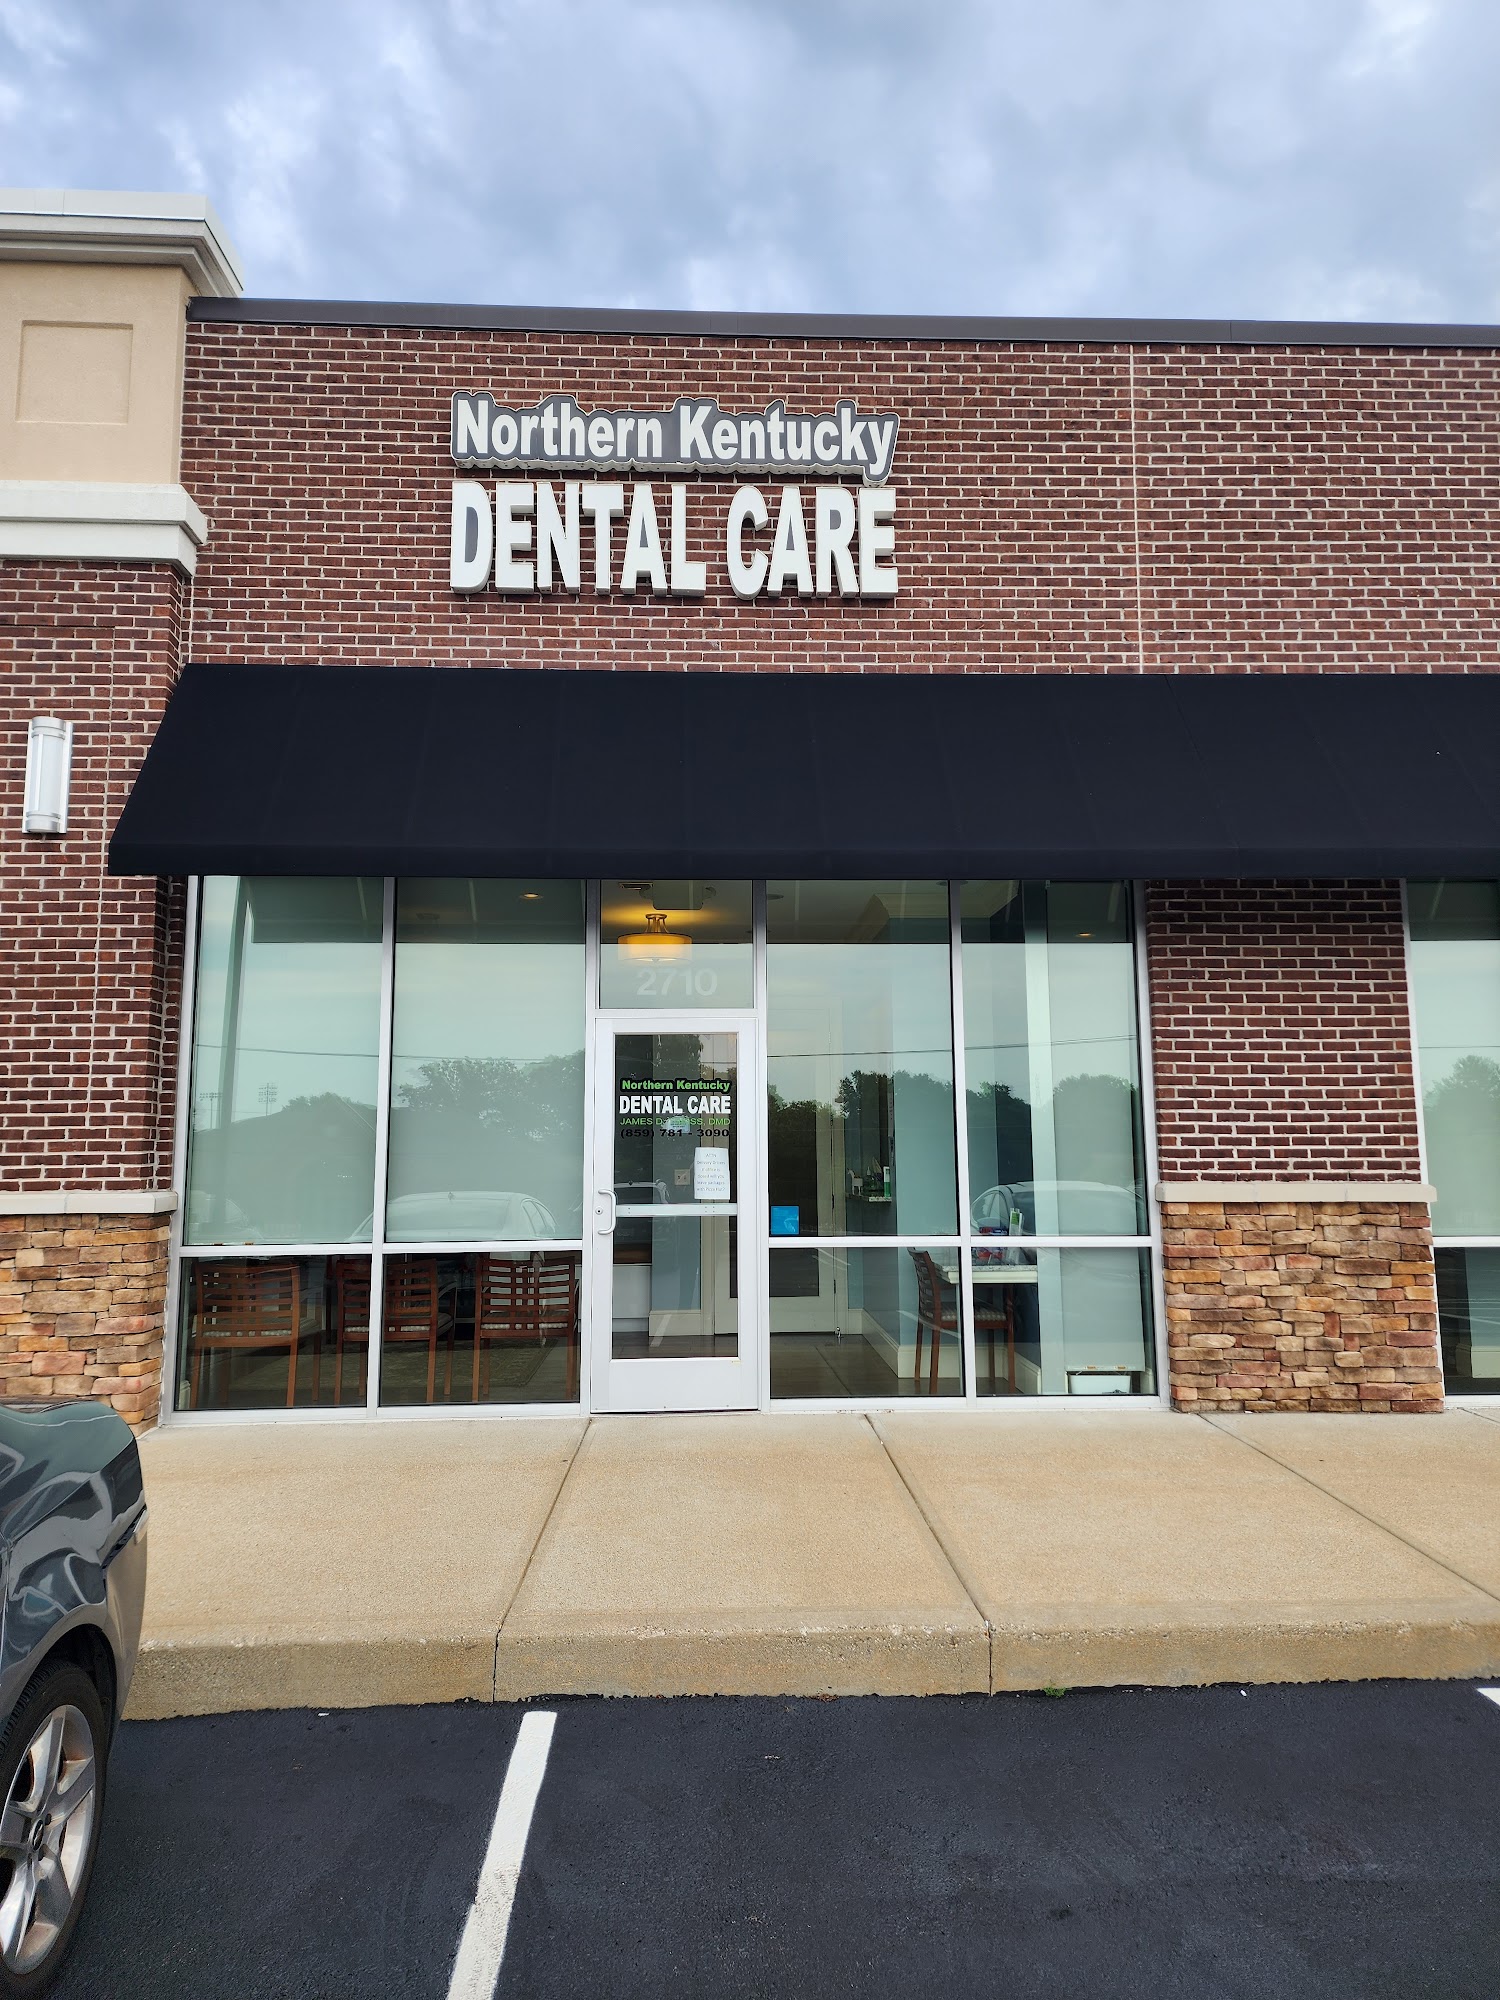 Northern Kentucky Dental Care 2710 Alexandria Pike, Highland Heights Kentucky 41076